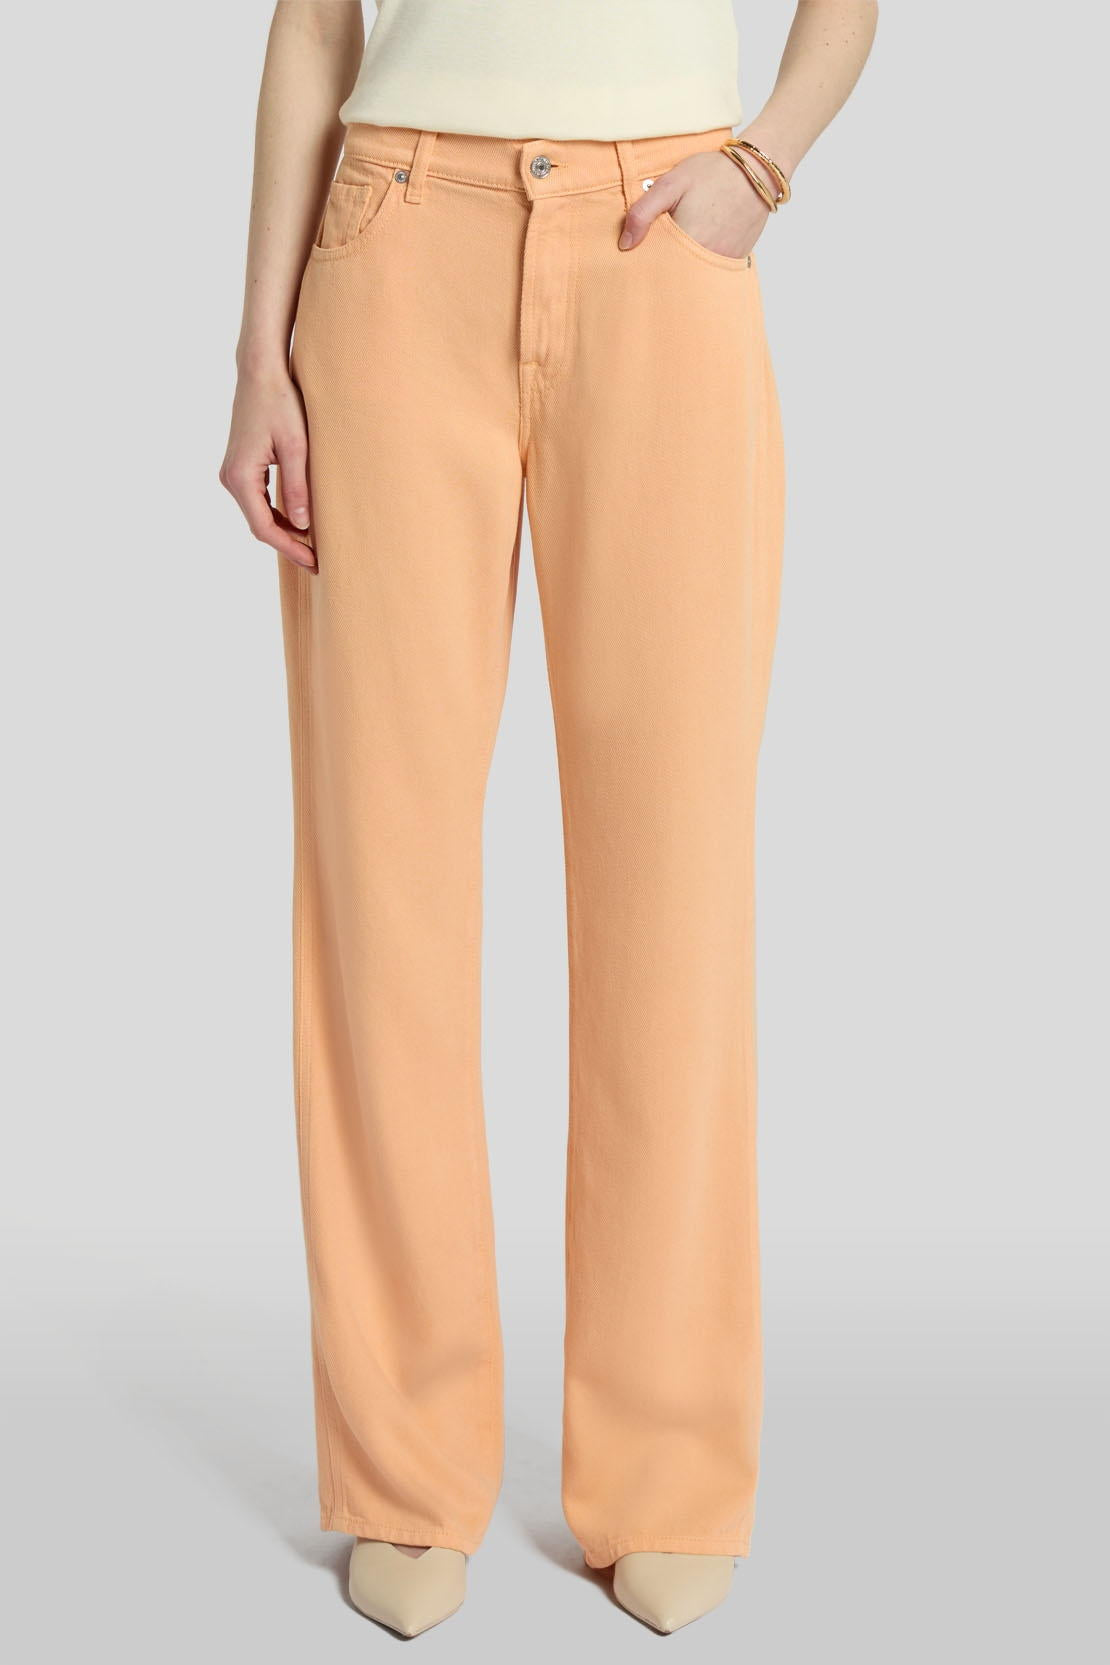 Tess Trouser Colored Tencel Peach_JSSTC850GF_GF_02